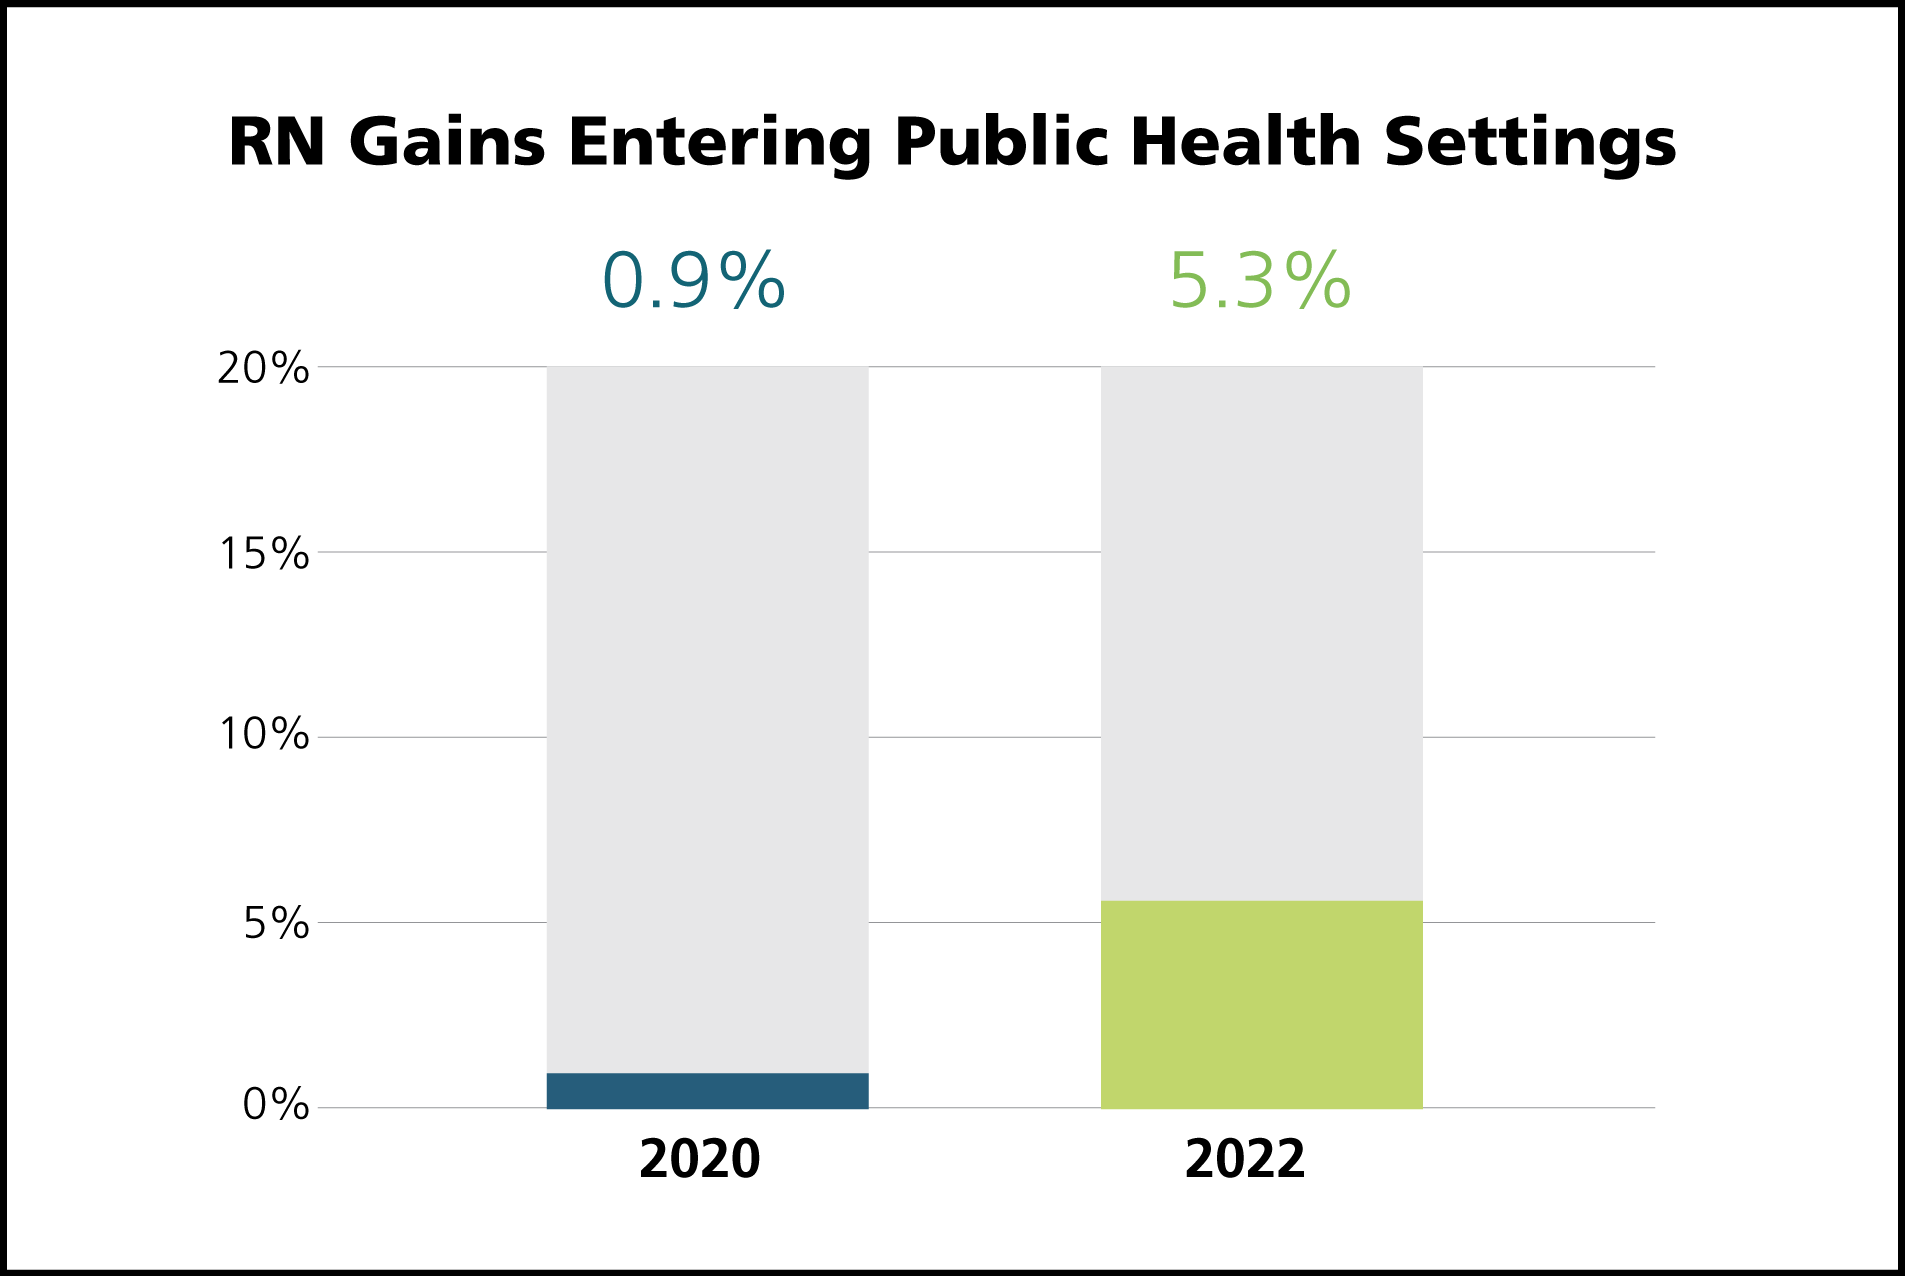 RN Gains Entering Public Health Settings: 2020-0.9%, 2022-5.3%